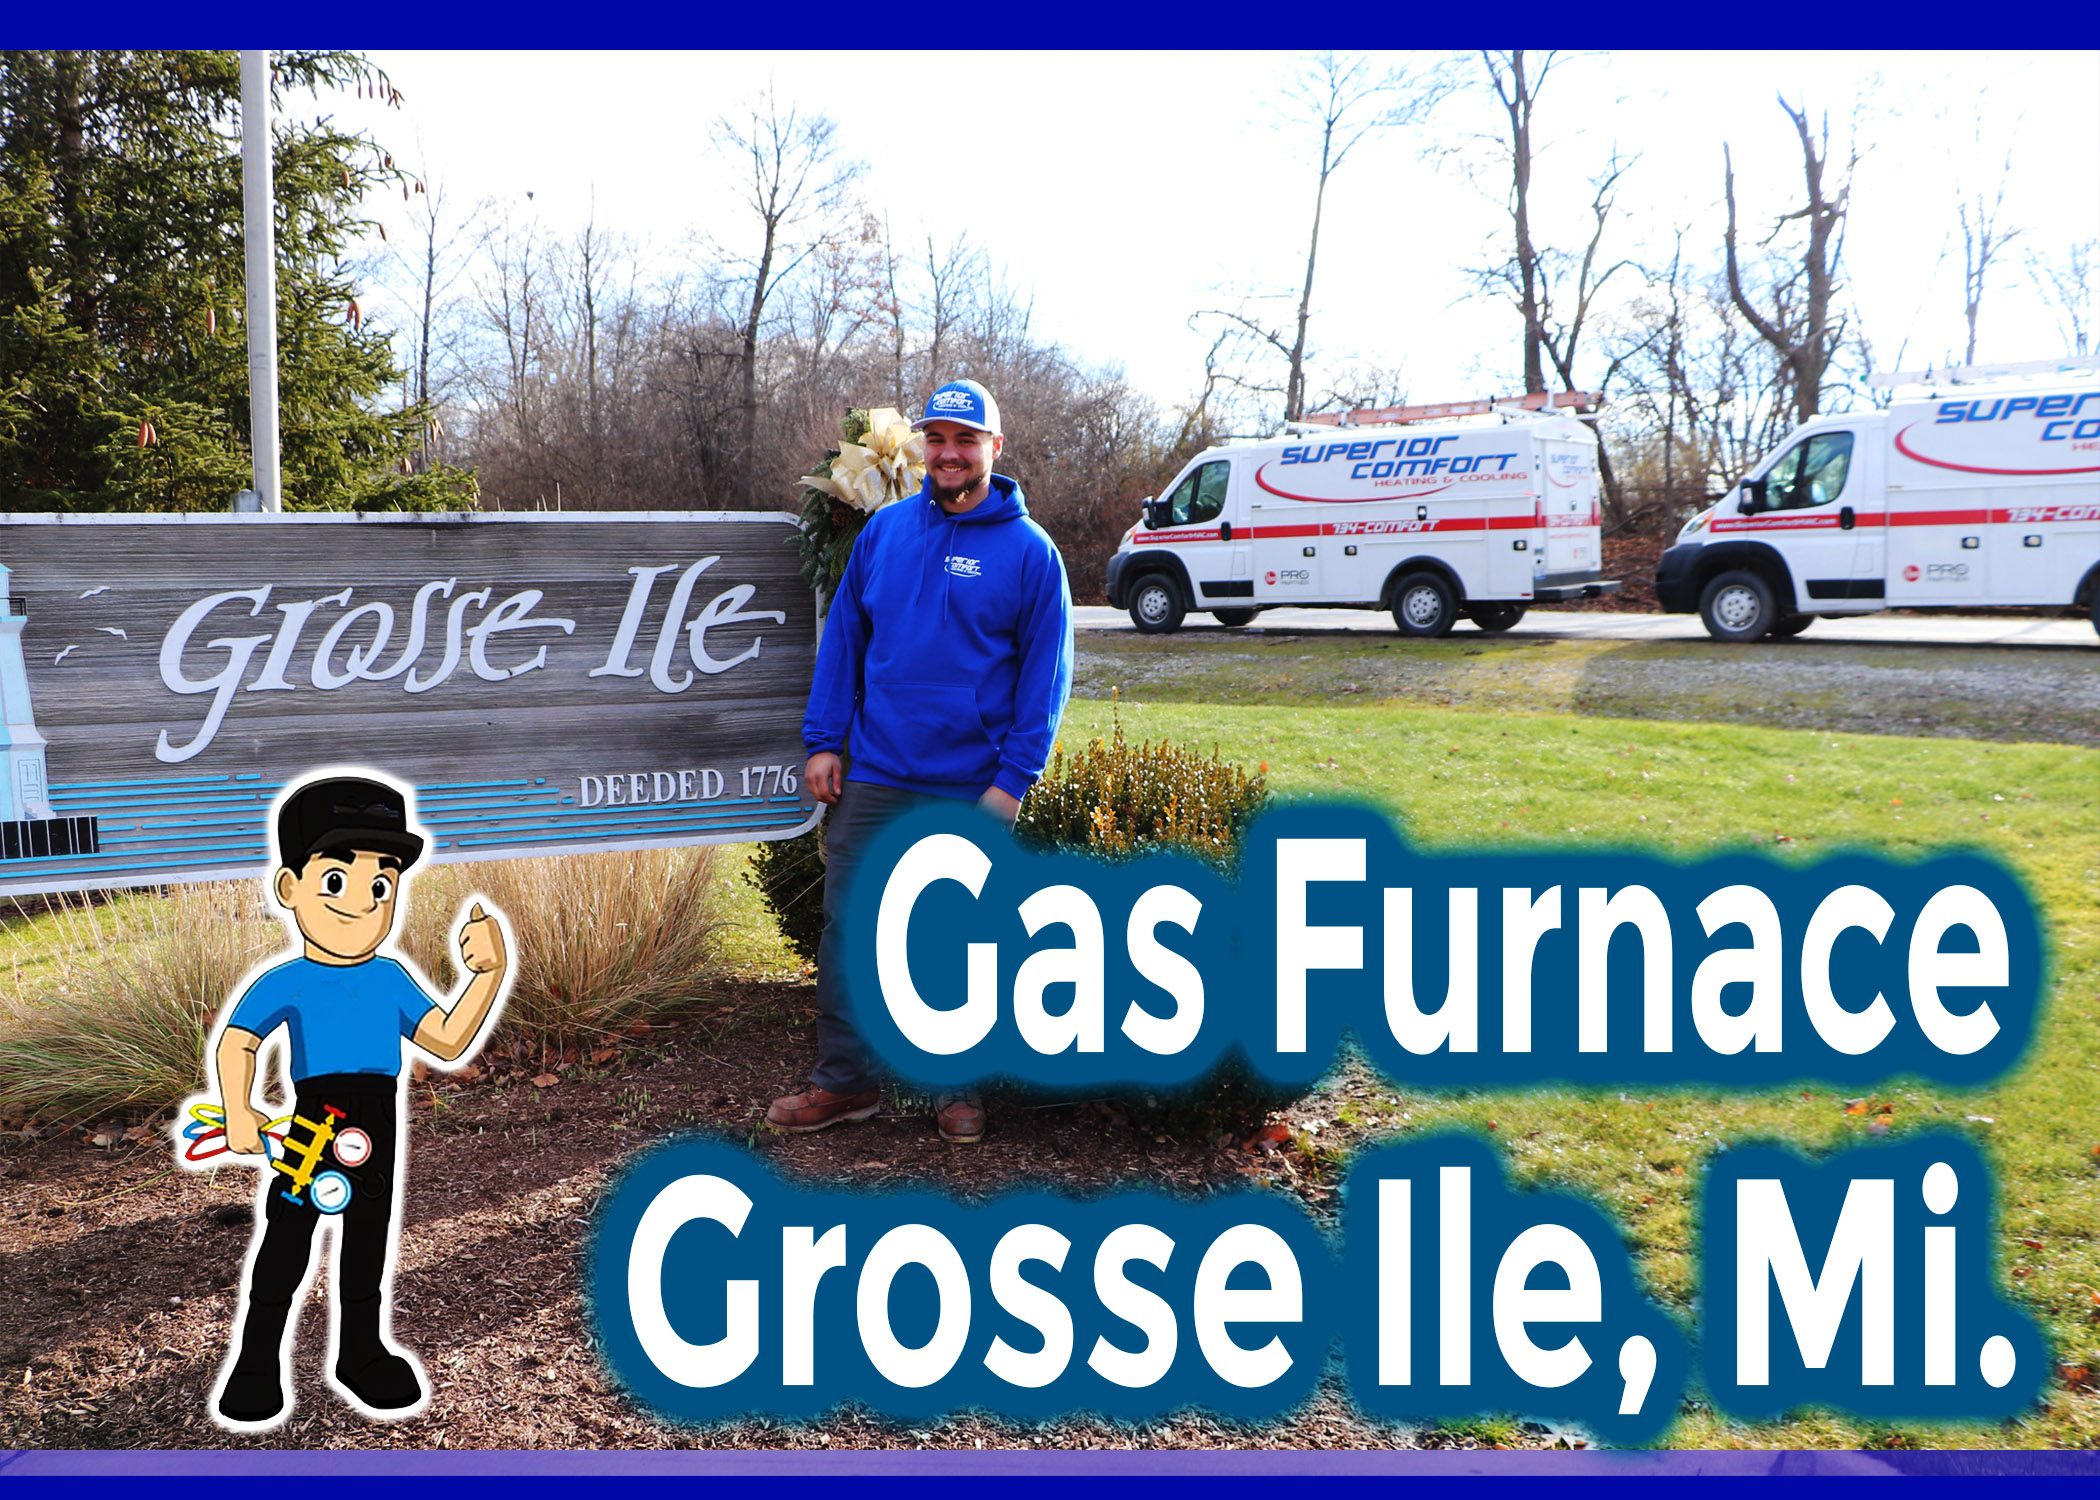 Main Features of Gas Furnace Grosse Ile, Michigan